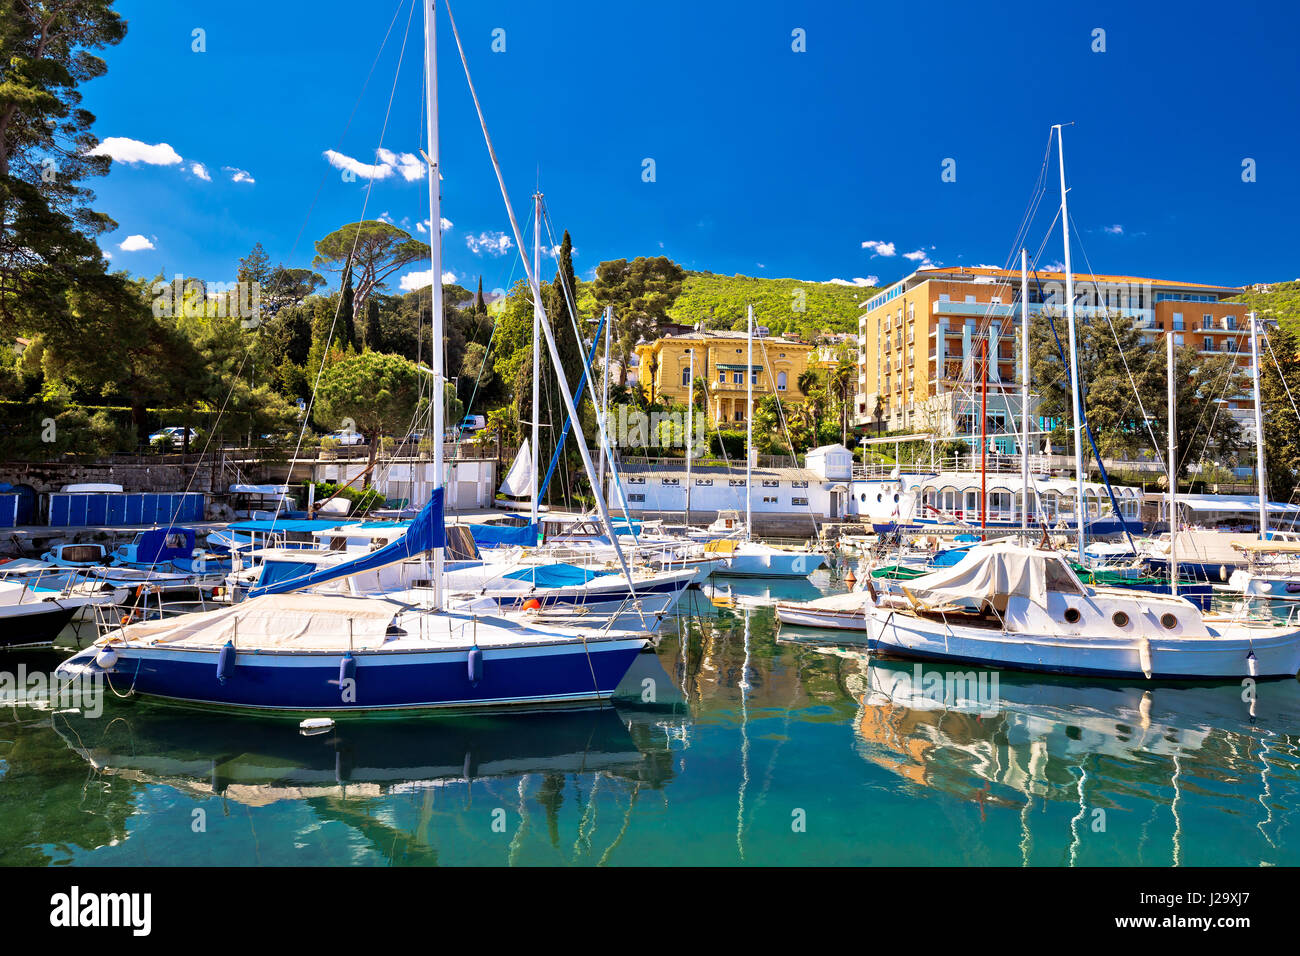 Adriatic town of Opatija turquoise harbor and waterfront view, Kvarner bay, Croatia Stock Photo